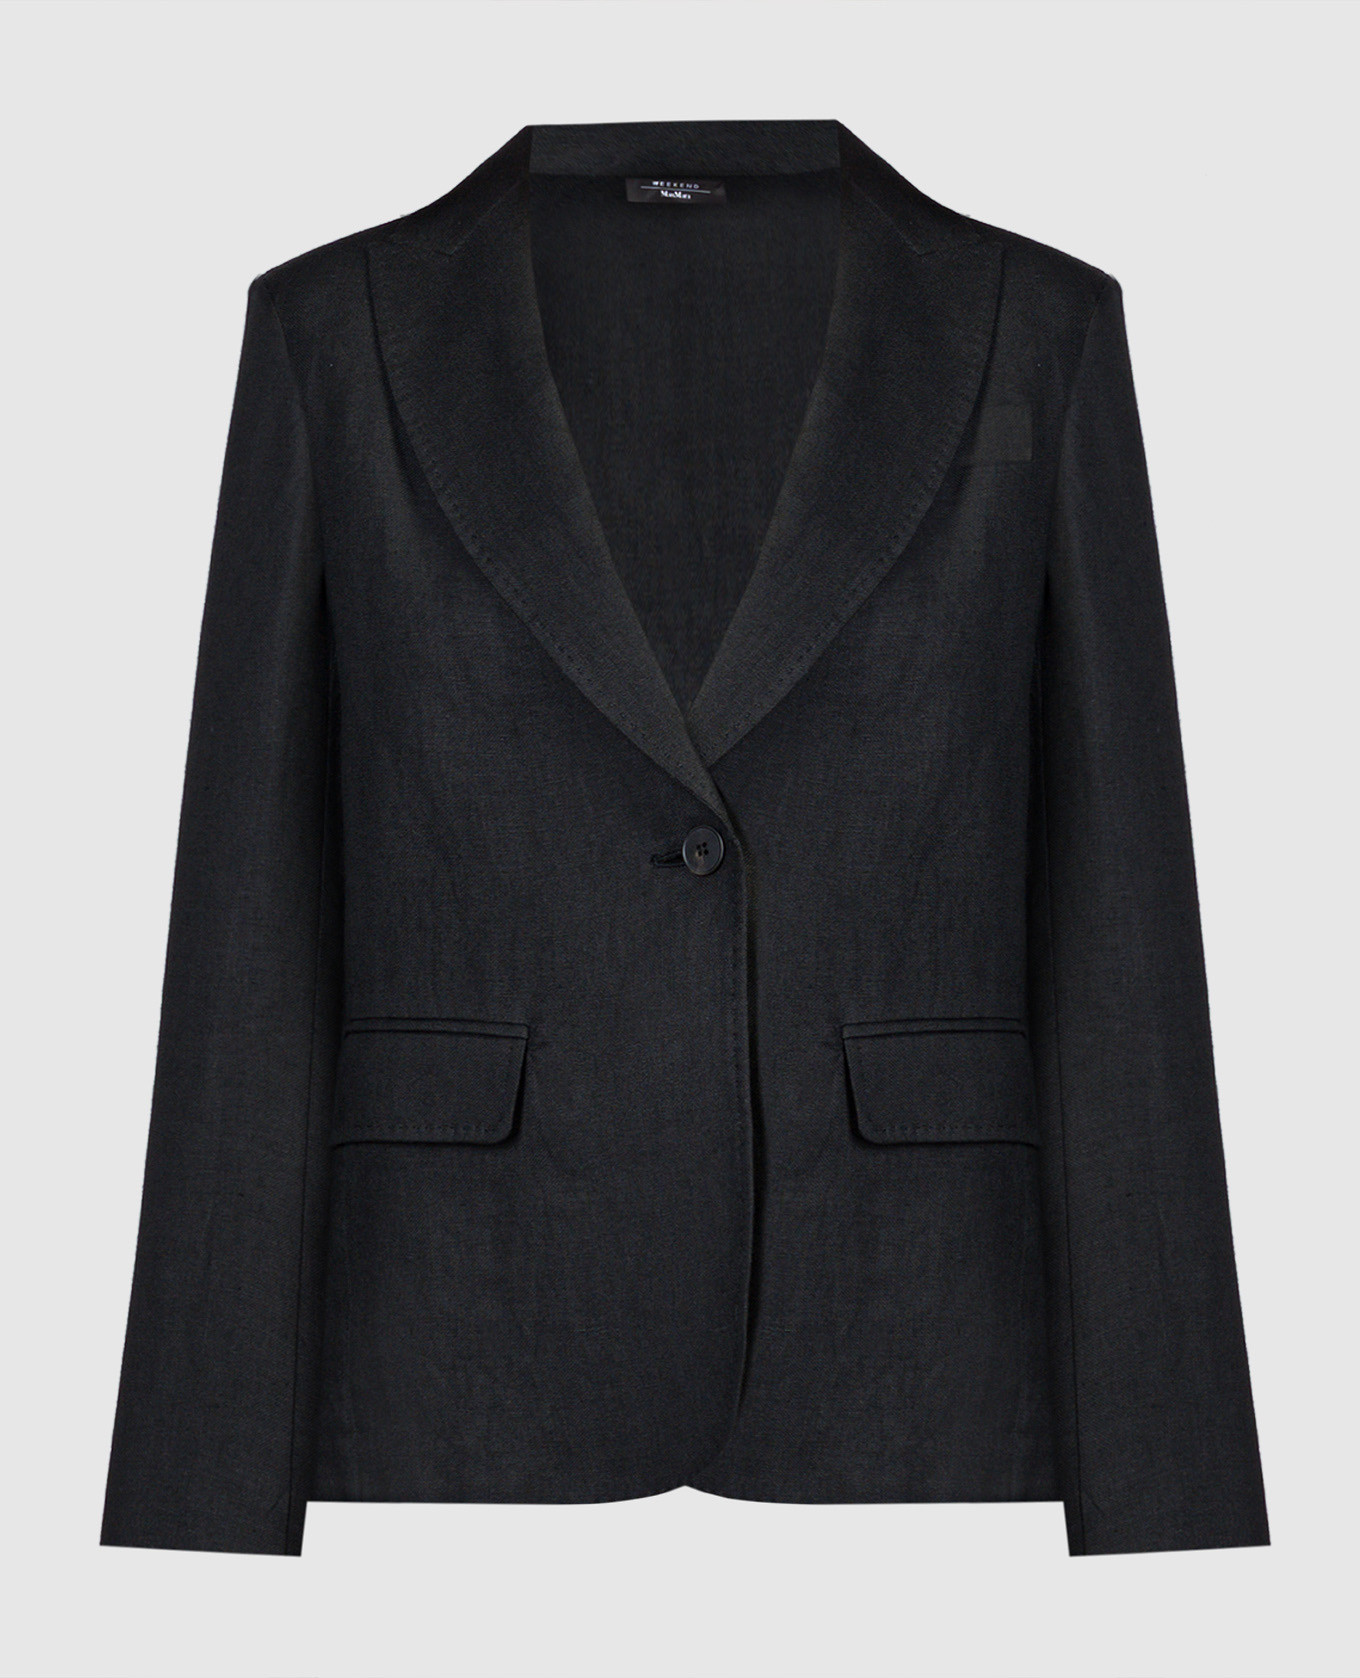 Black Nalut jacket made of linen